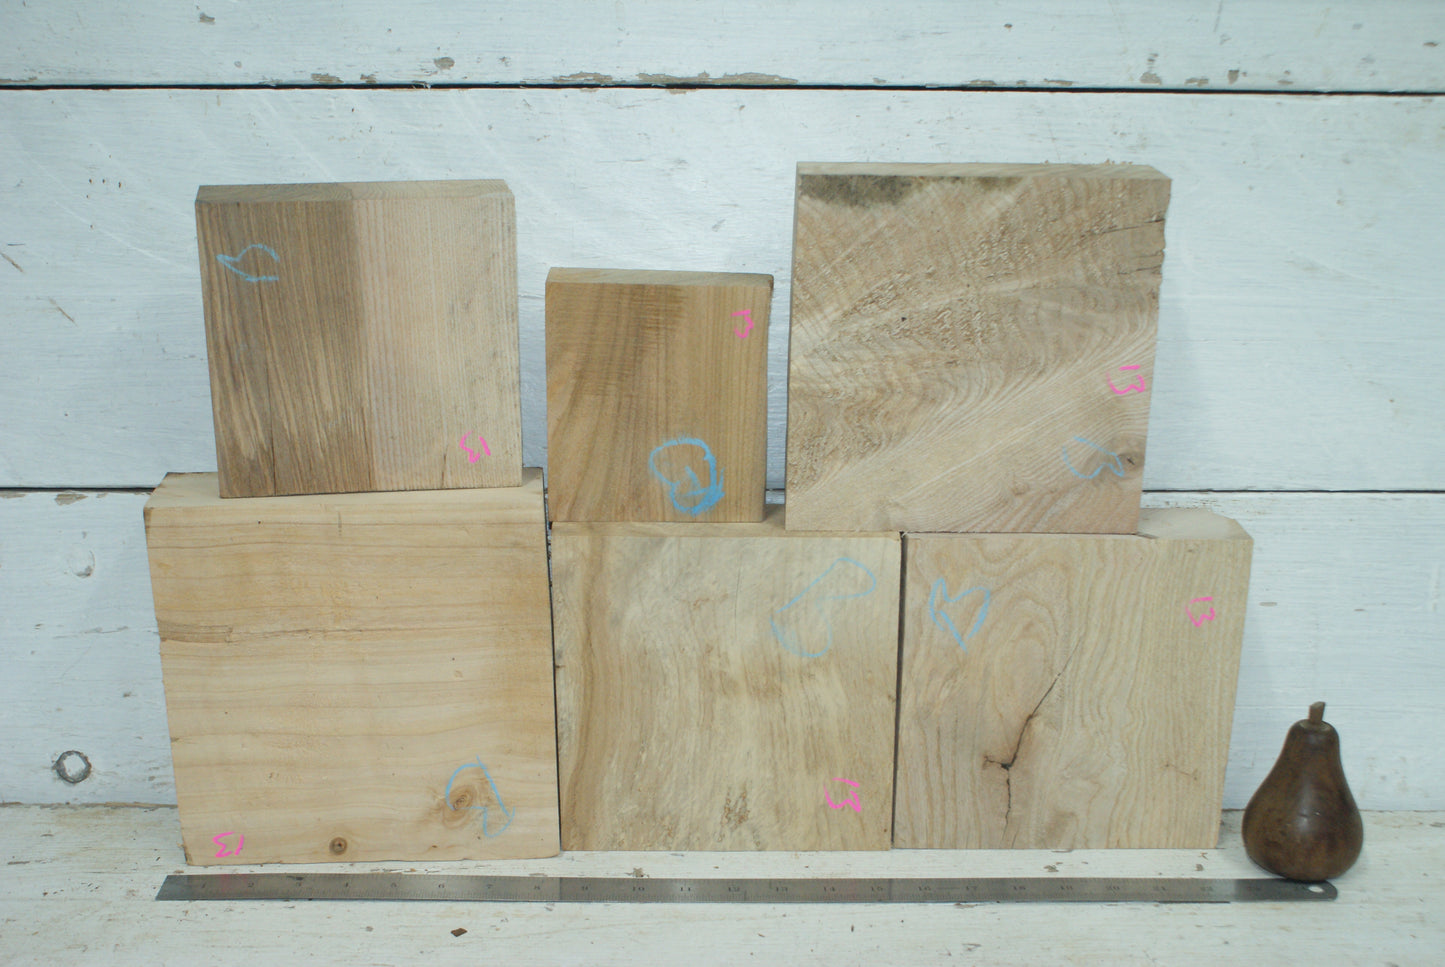 6 x Wood Turning Blanks  4 x 4, 6 x 6, 7 x 7, 8 x 8  x 2 "  B Grade   (013)